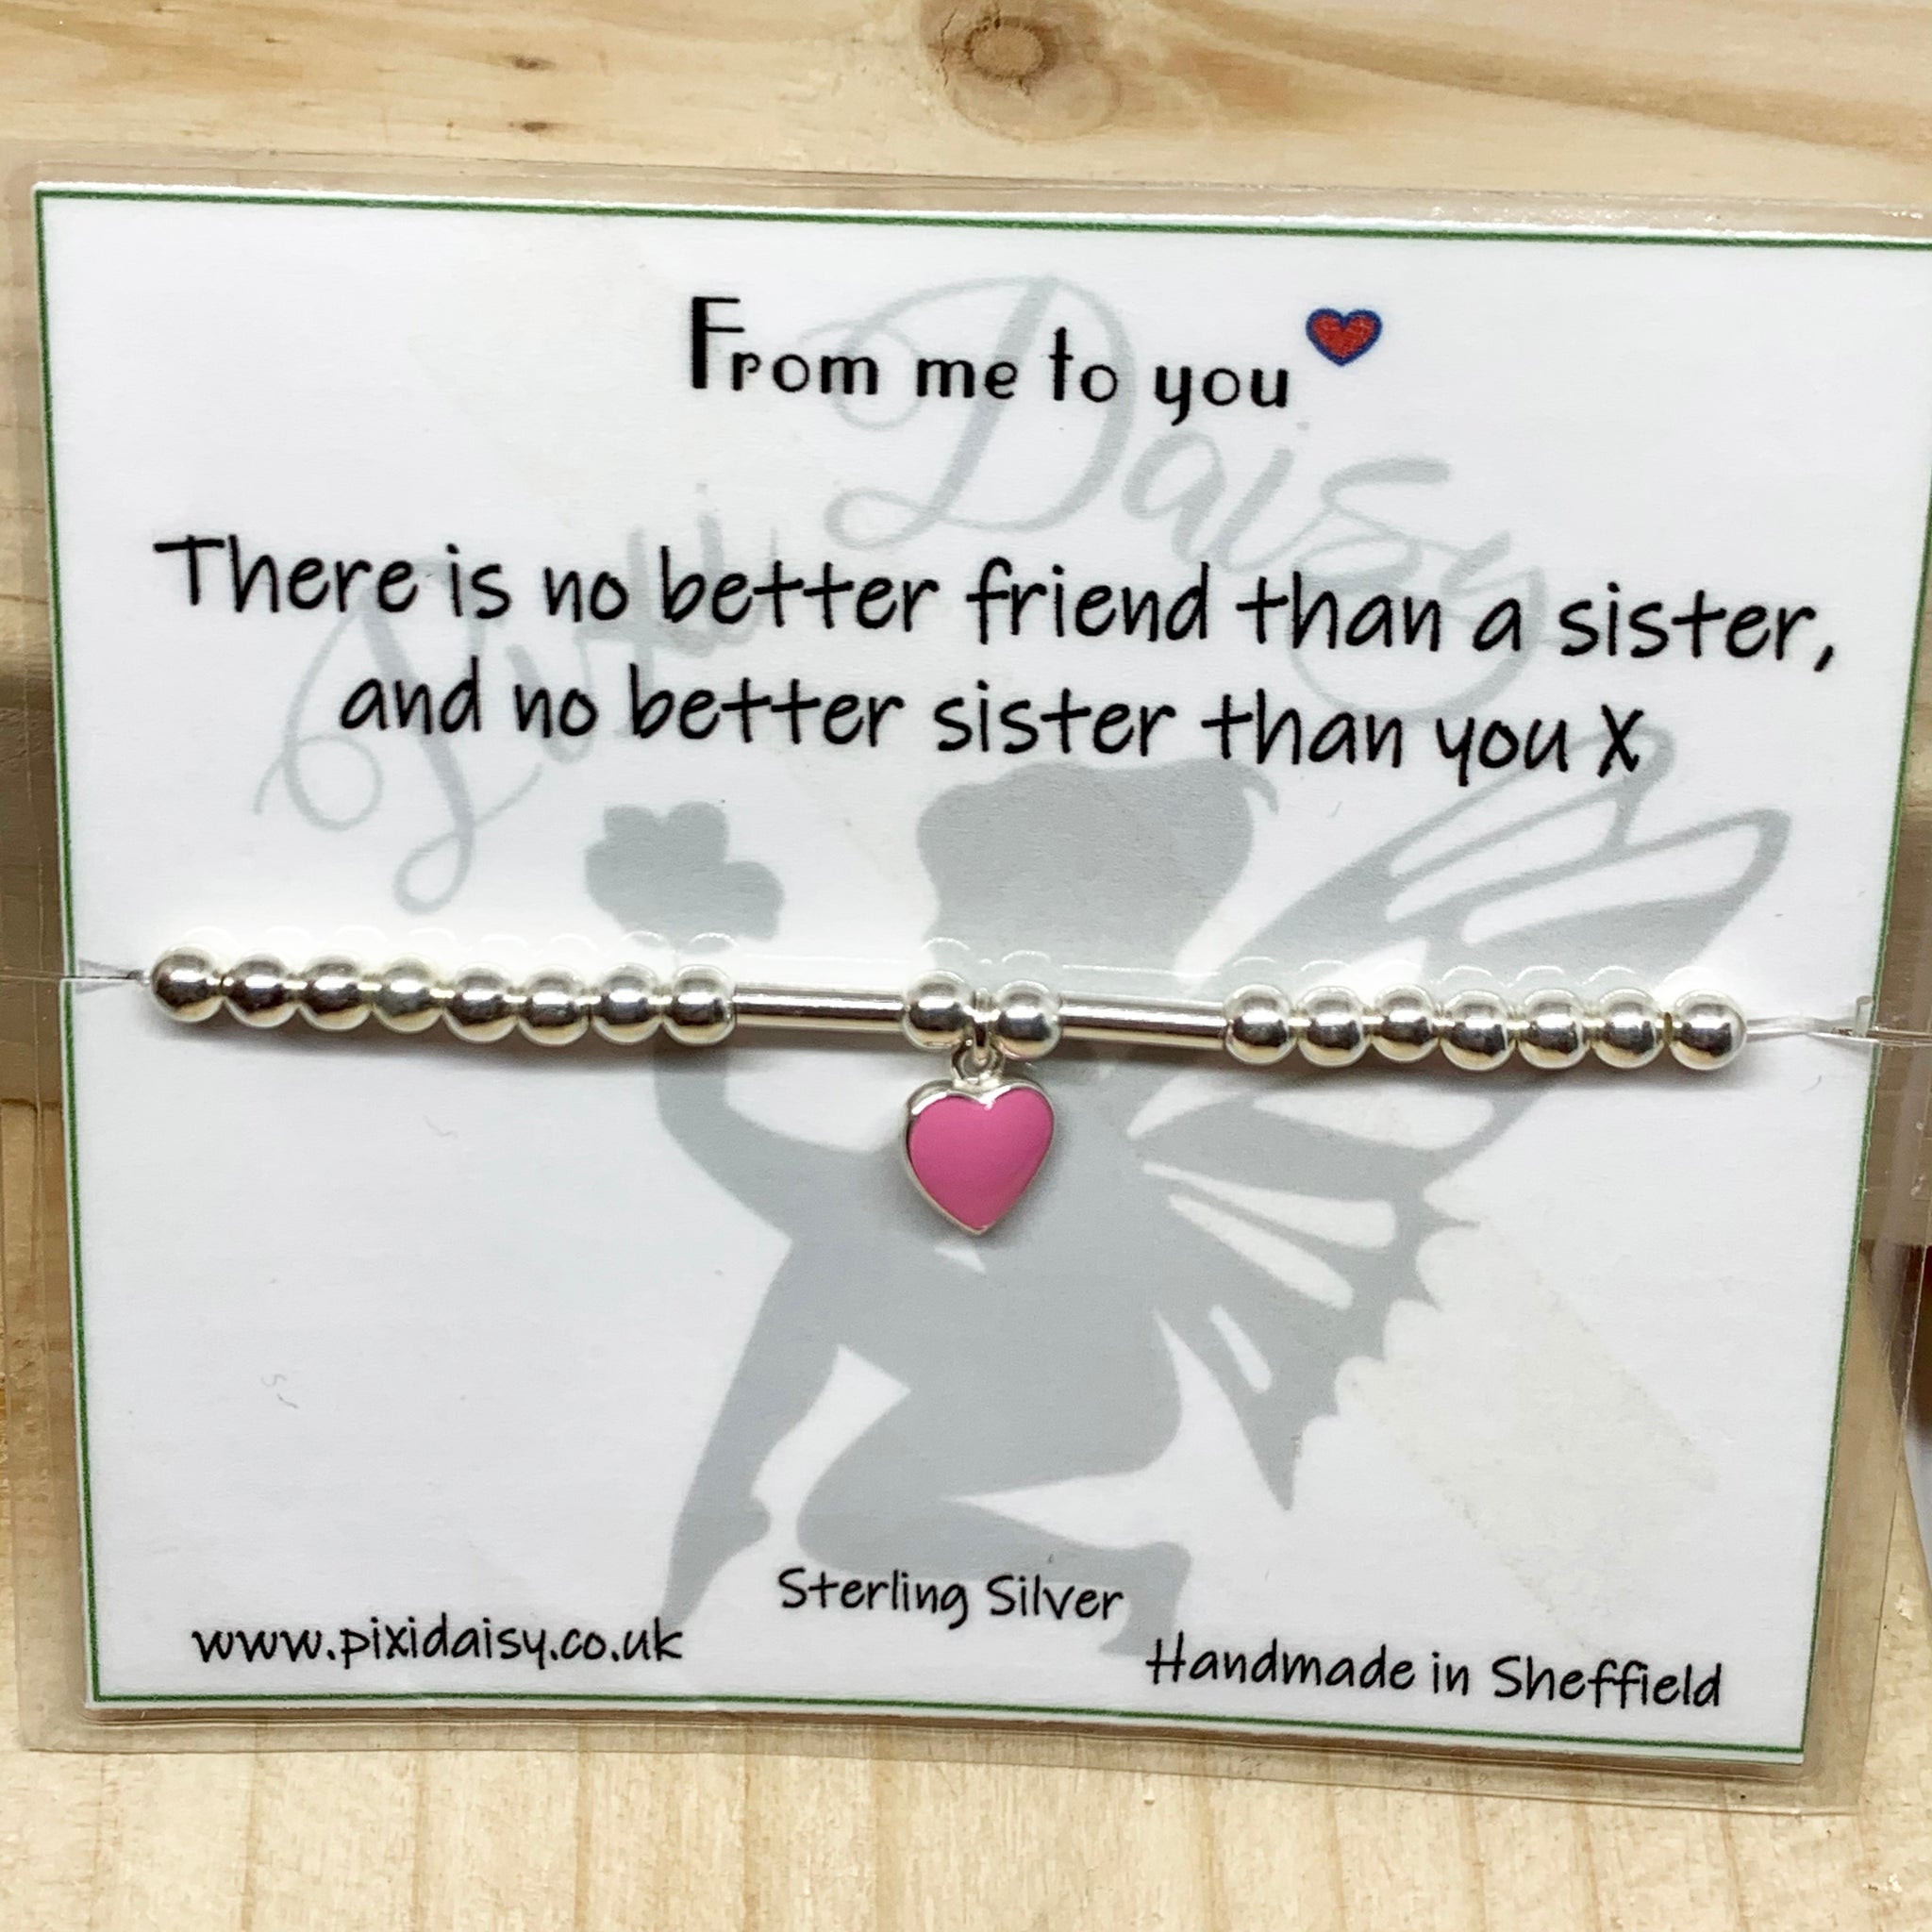 No Better Friend Then a Sister Sentiment Bracelet from Pixi Daisy